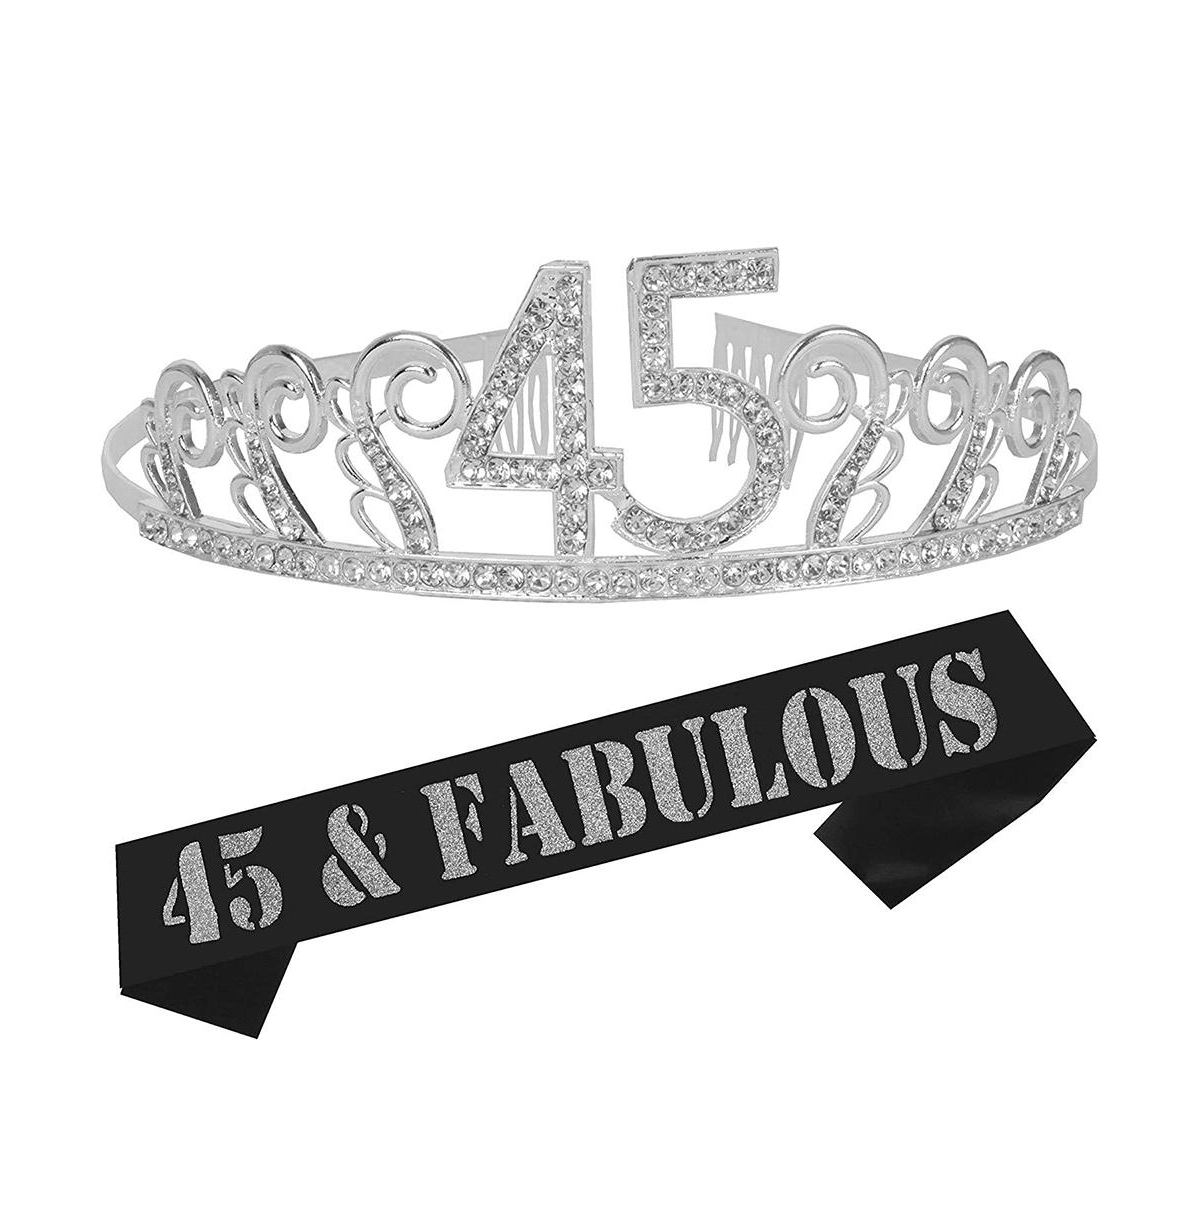 45th Birthday Sash and Tiara Set for Women - Sparkling Glitter Sash with Elegant Silver Metal Rhinestone Wave Tiara, Perfect 45th Birthday Party Acces